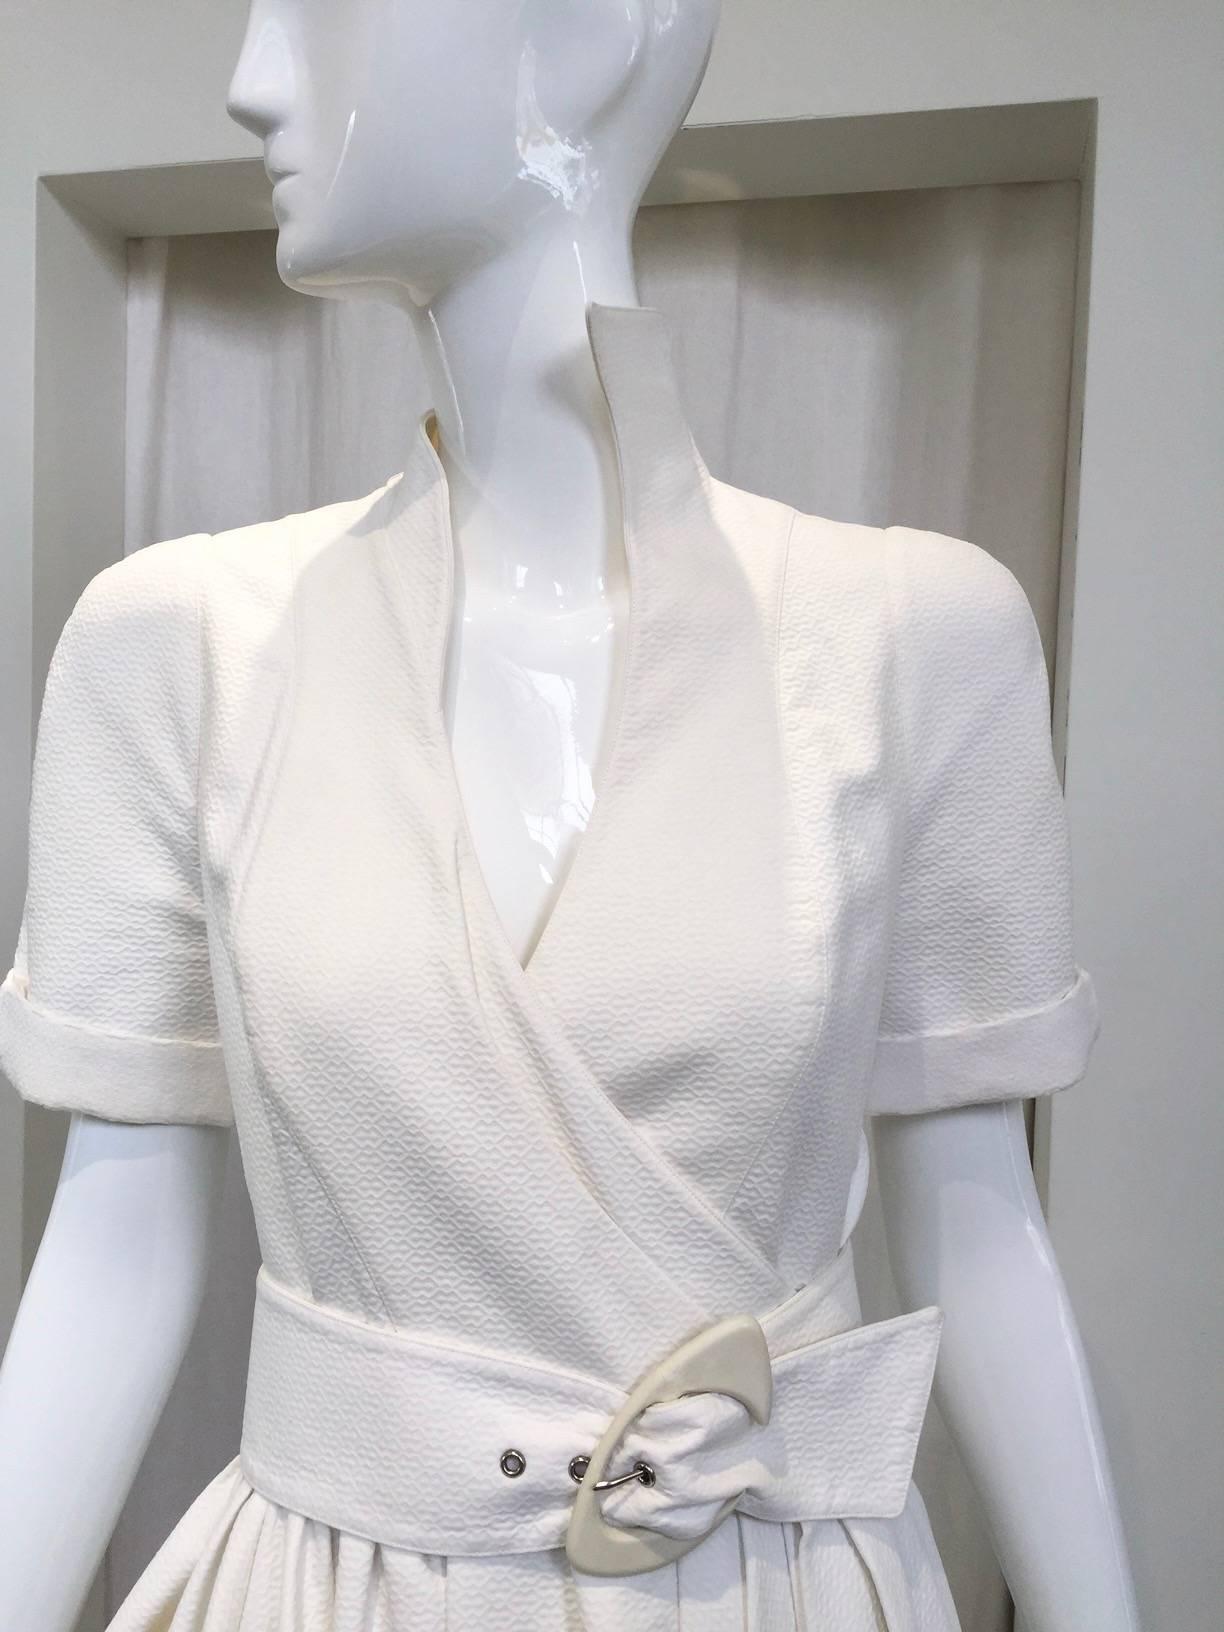 1990s Thierry Mugler white cotton wrap dress. 
Bust: 34